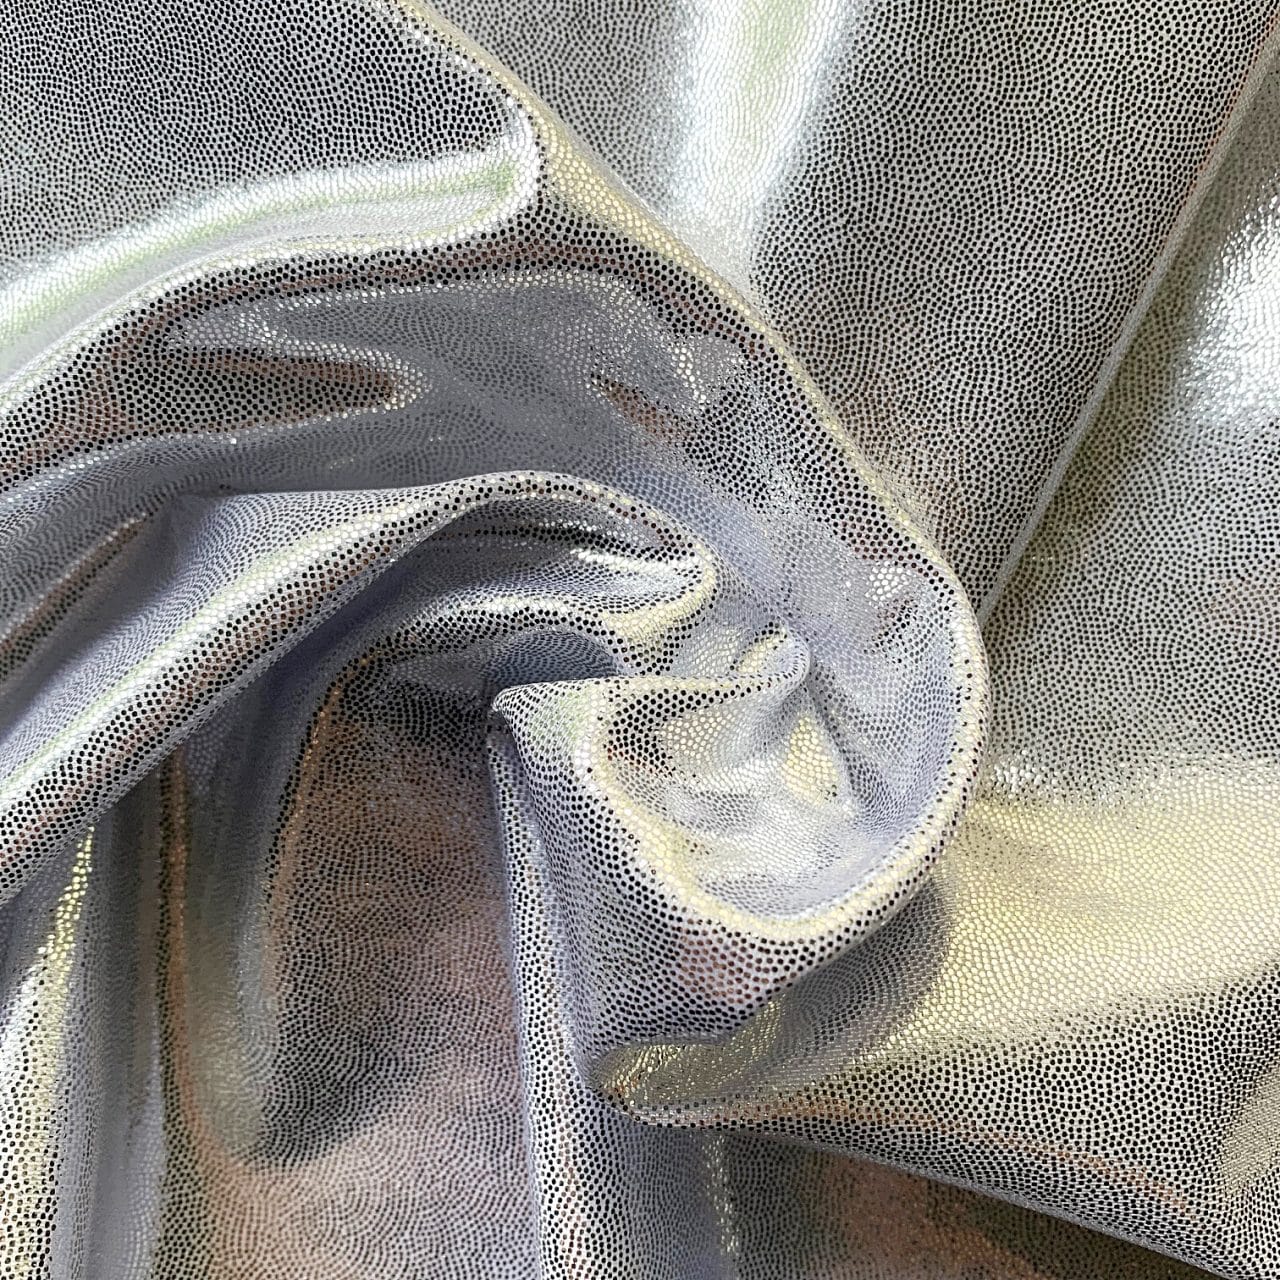 https://www.solidstonefabrics.com/wp-content/uploads/2018/06/Metallic-Sheen-Silver-White-Closeup-Solid-Stone-Fabrics-Inc.-Fabric-By-The-Yard.jpg